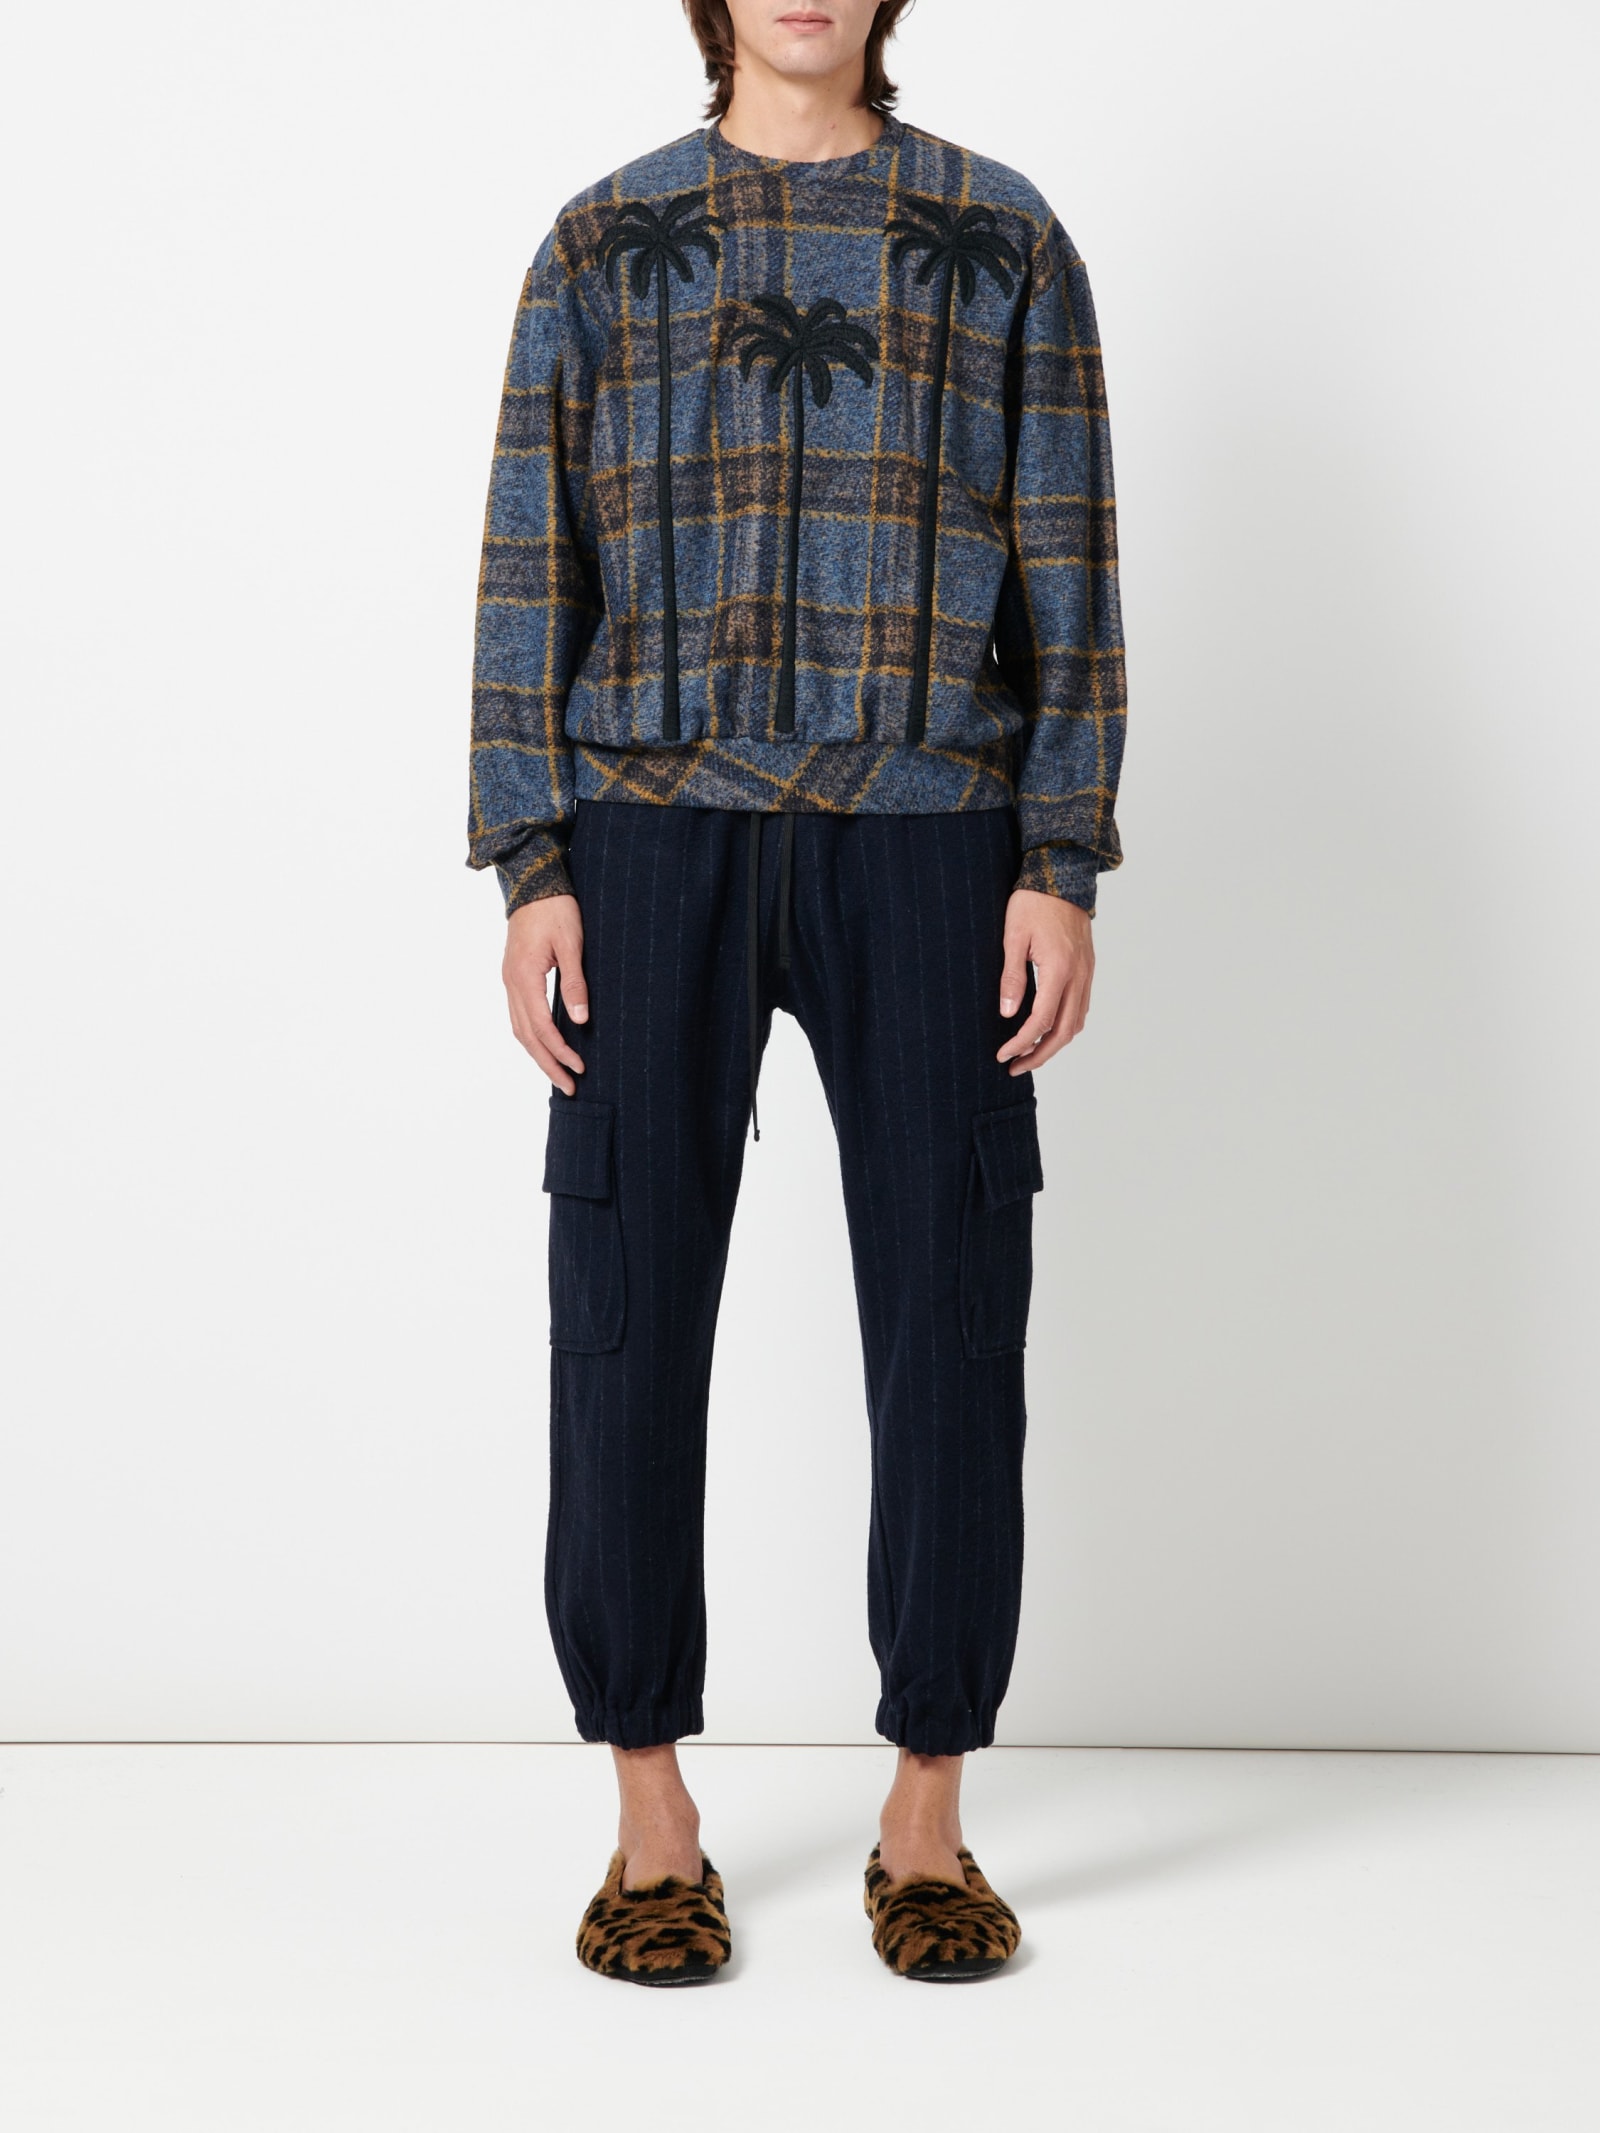 Christian Pellizzari Sweatshirt Check Wool Jersey With Black Embroidery Palms